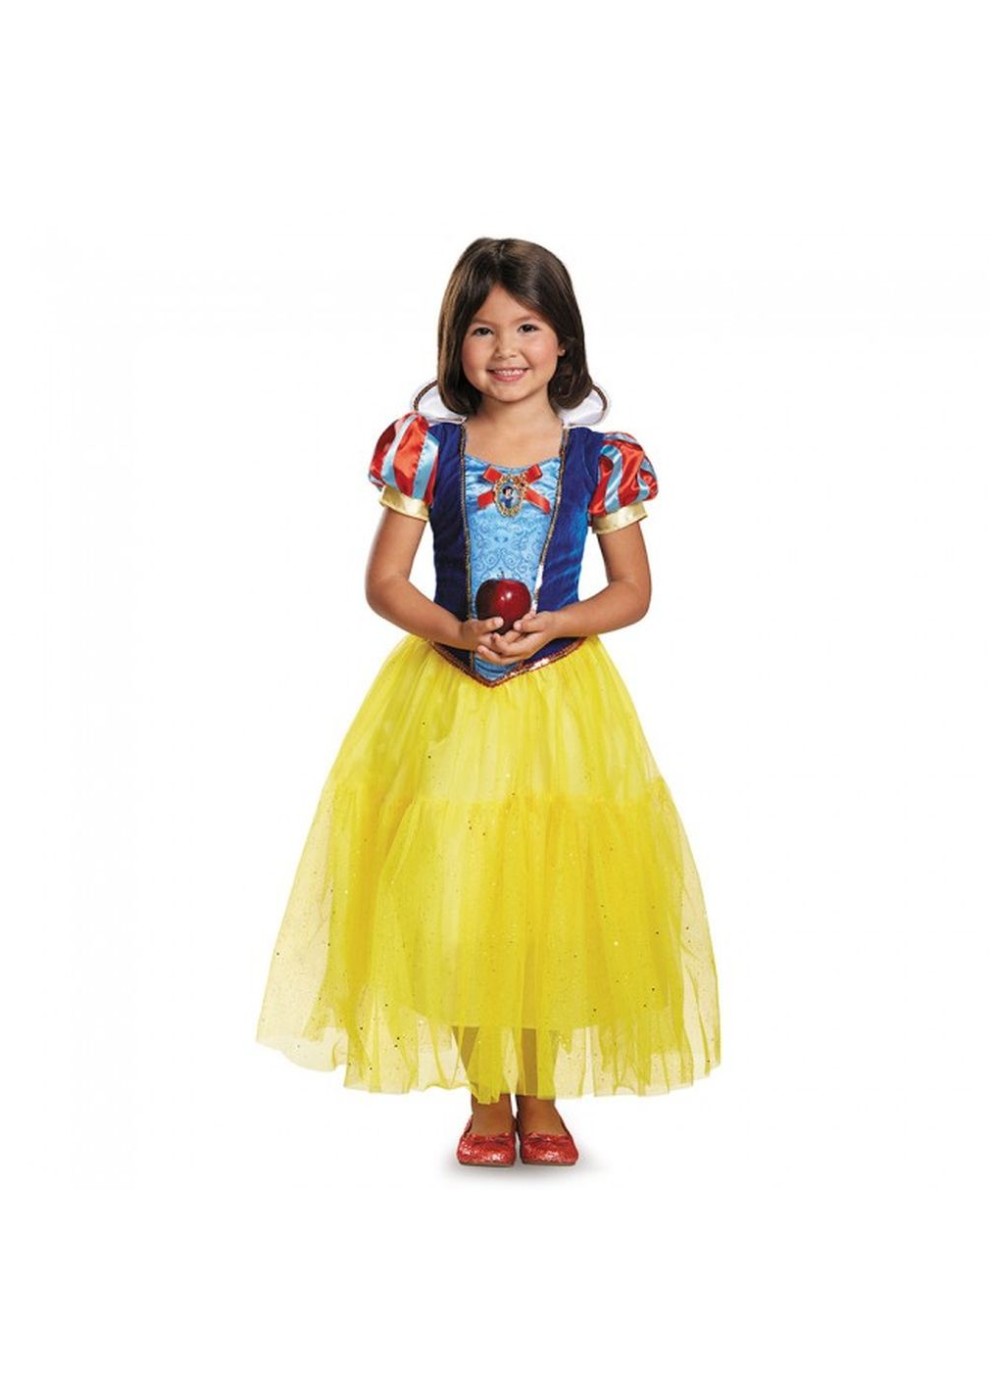 Disney Snow White Girls Costume